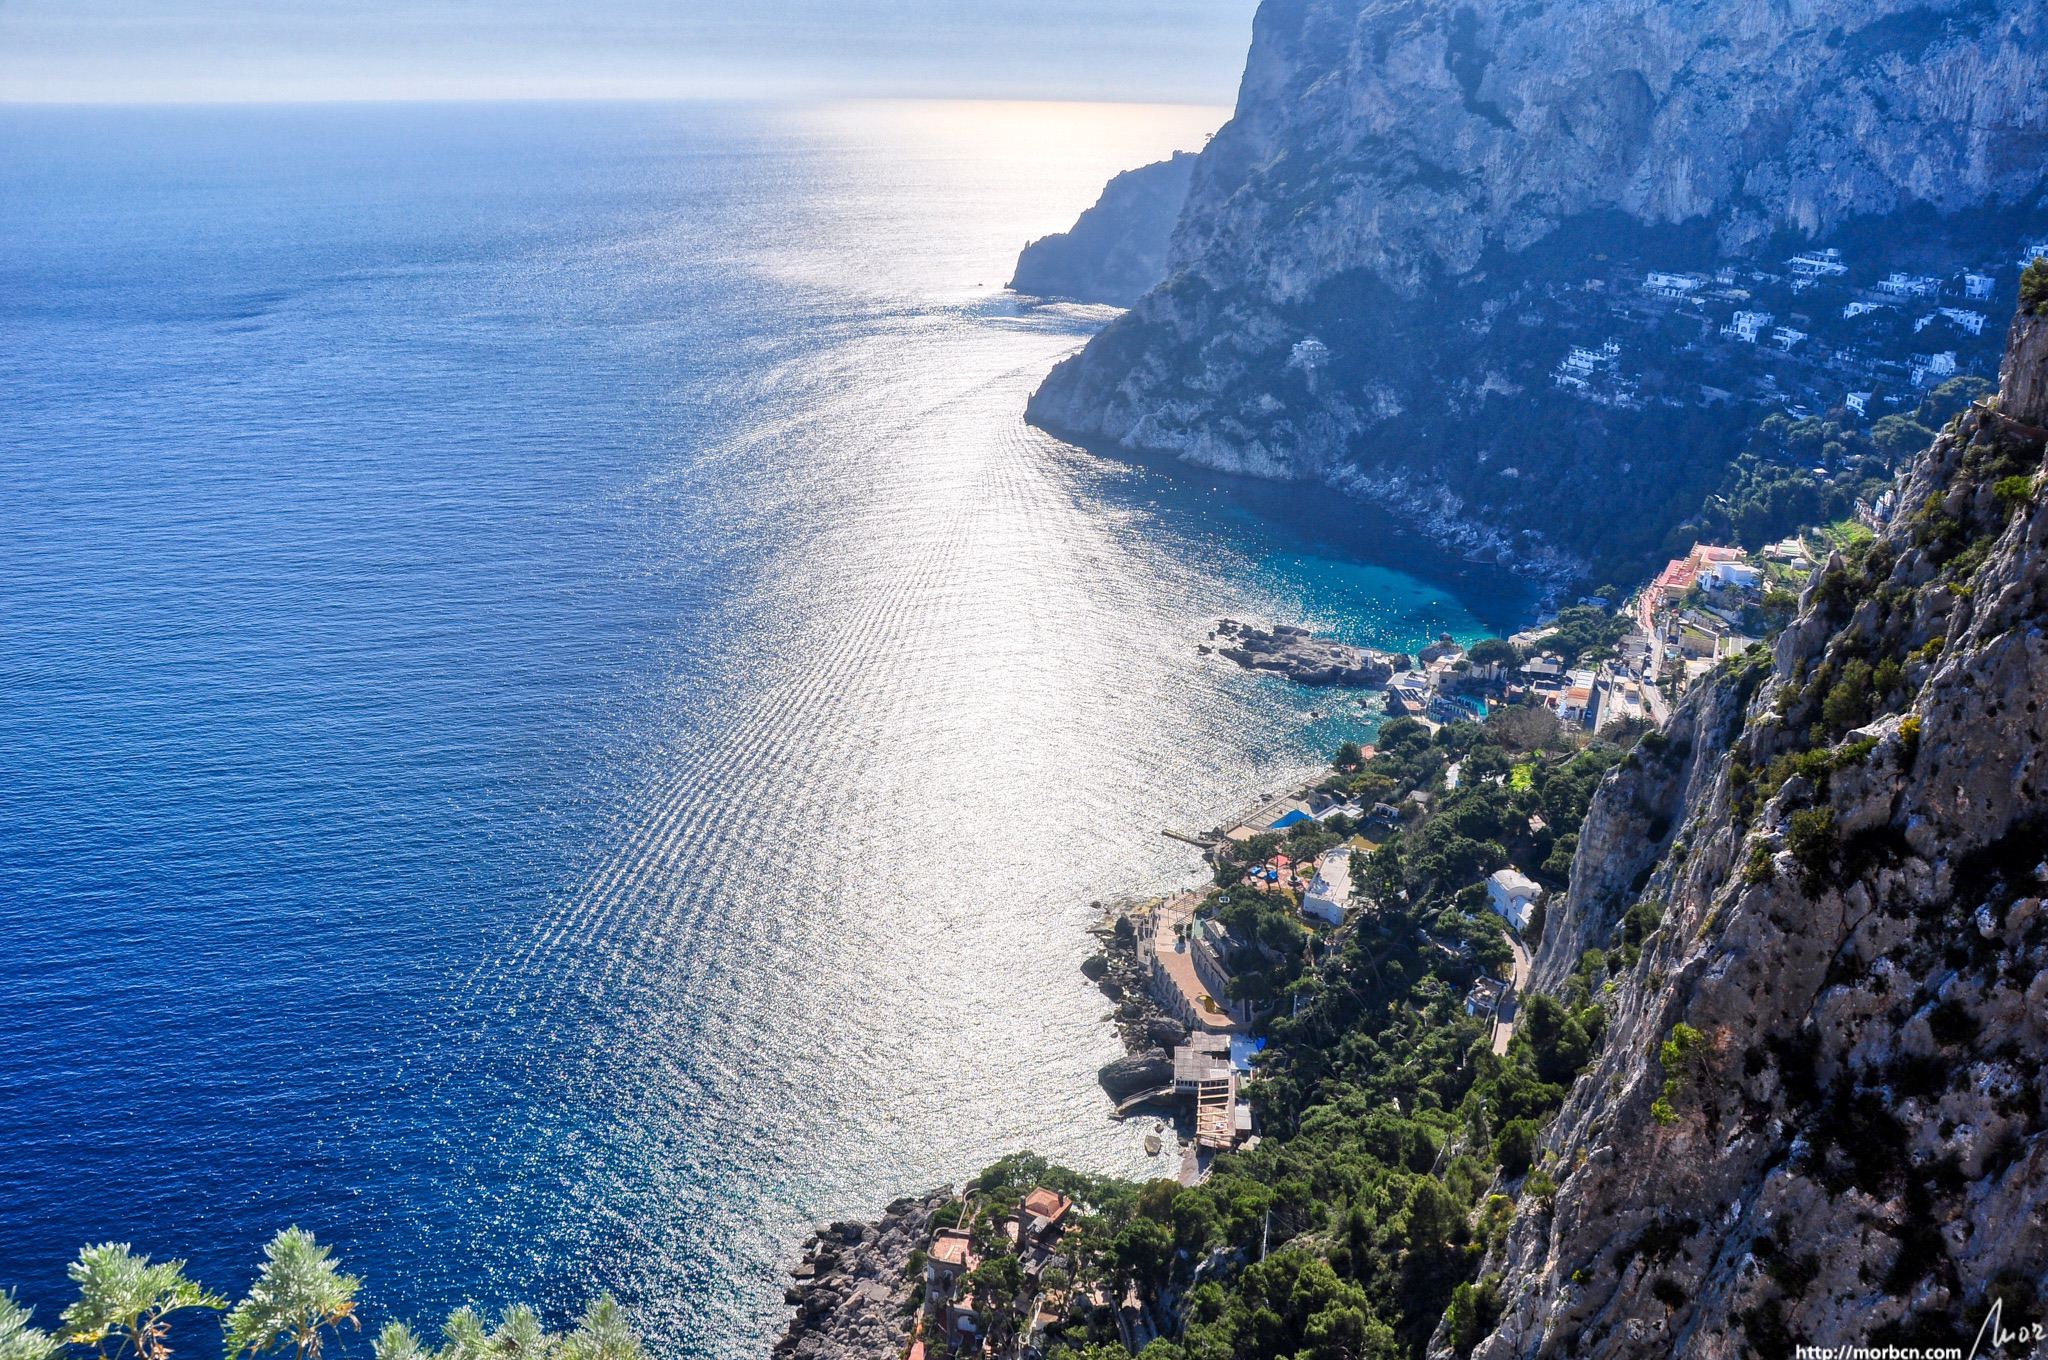 Capri, crediti: Flickr foto di MorBCN